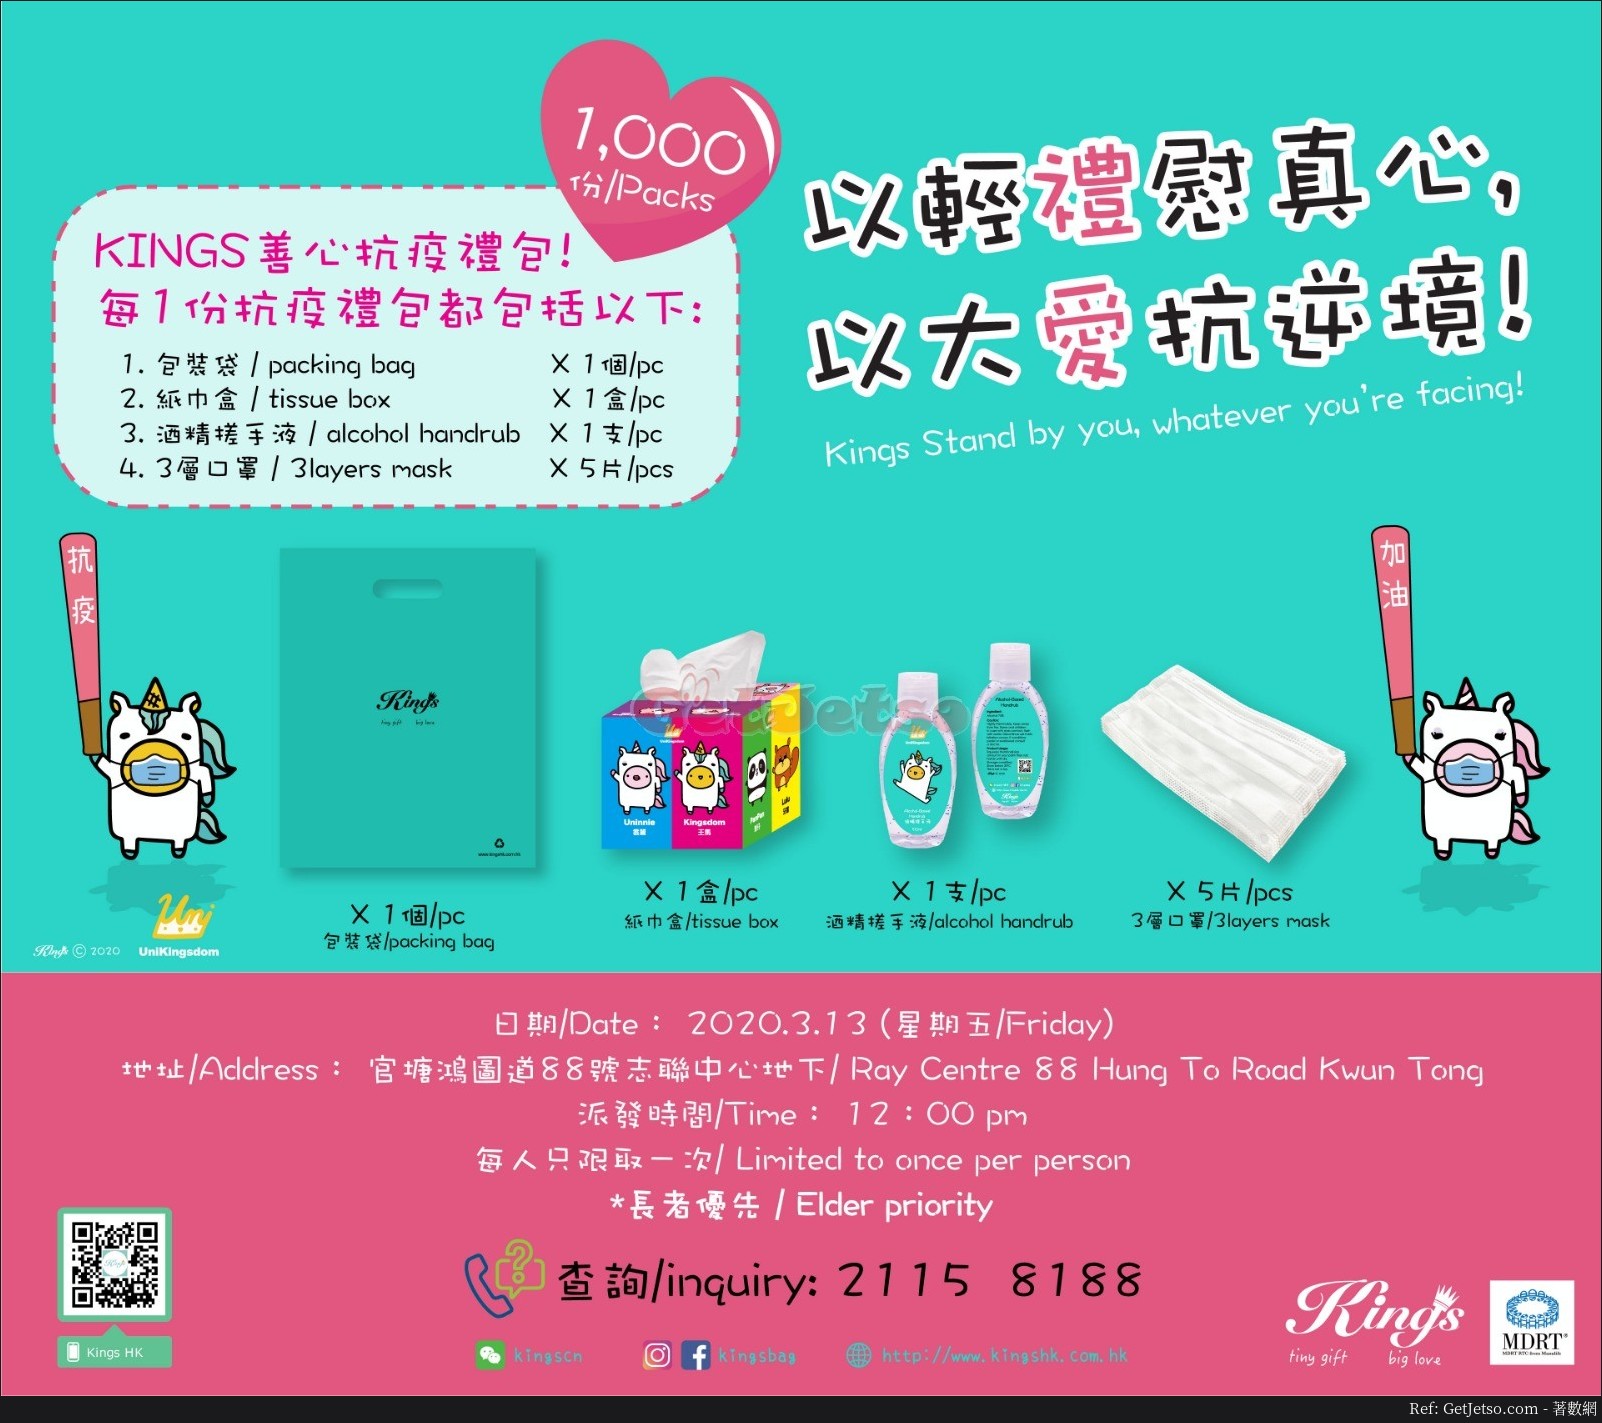 Kings Bag Factory 3月13日12:00免費派發抗疫包1000份@觀塘圖片1